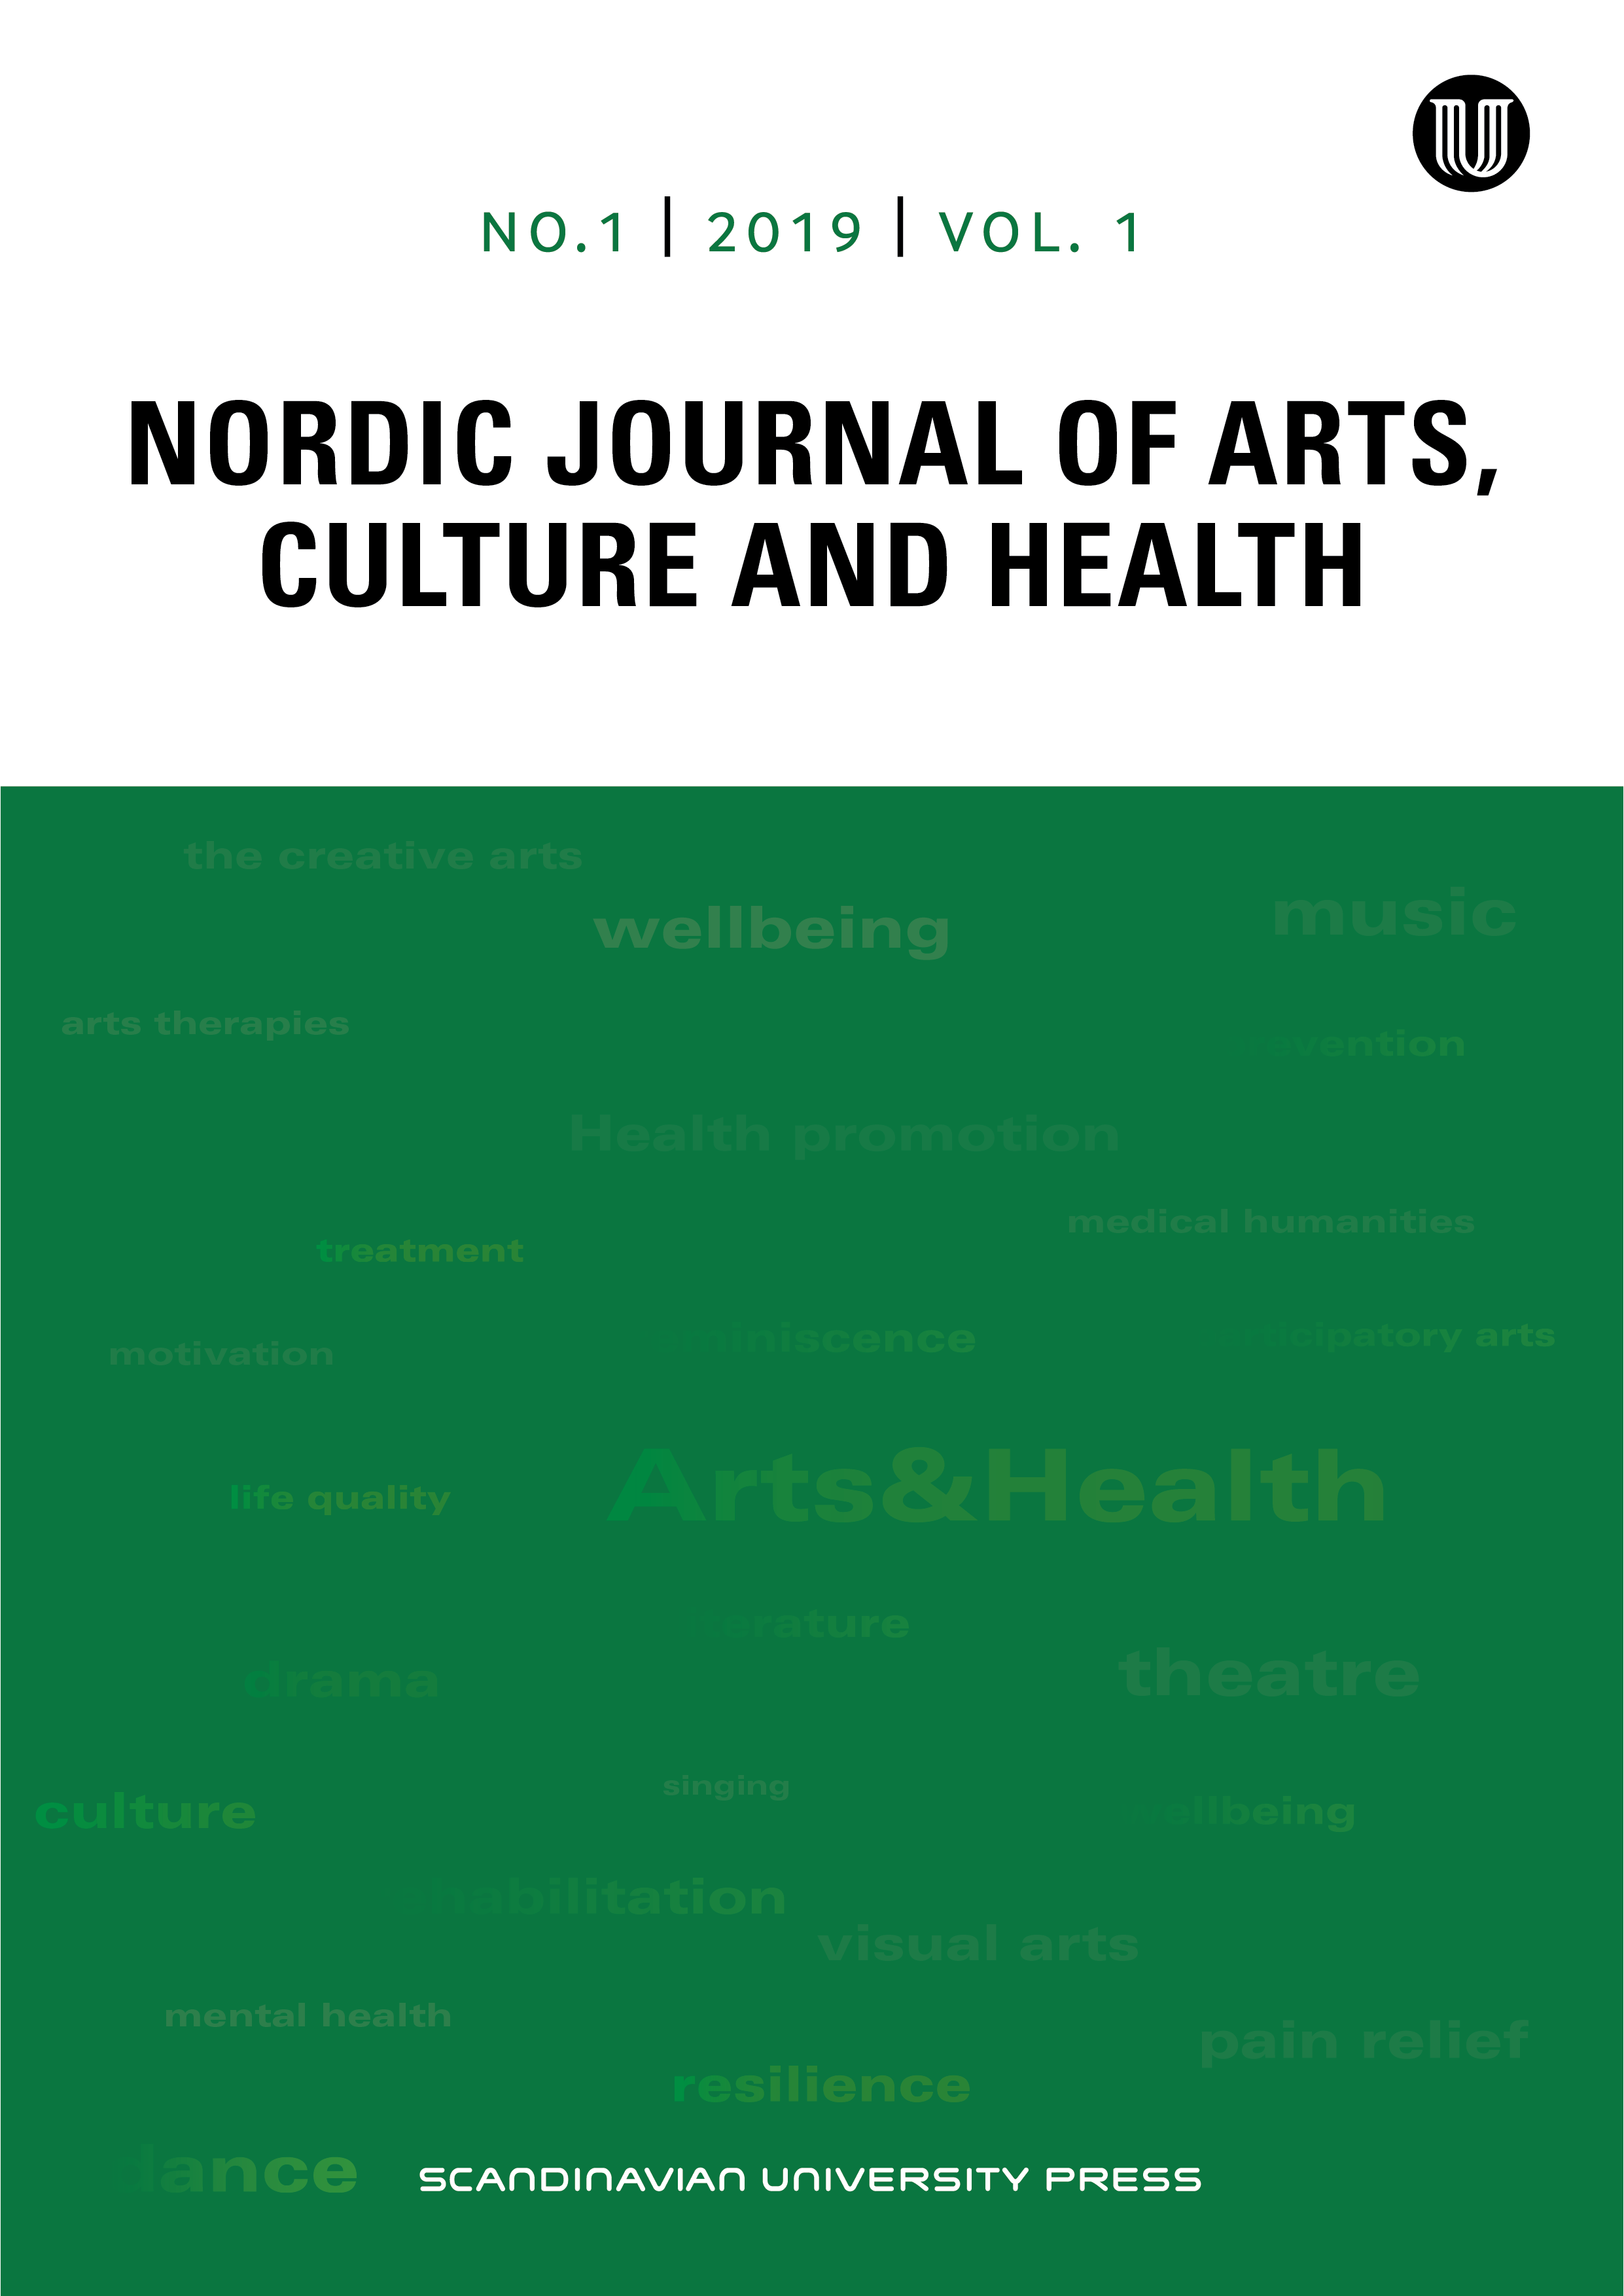 Forsiden af 'Nordic journal of arts, culture and health vol 1'